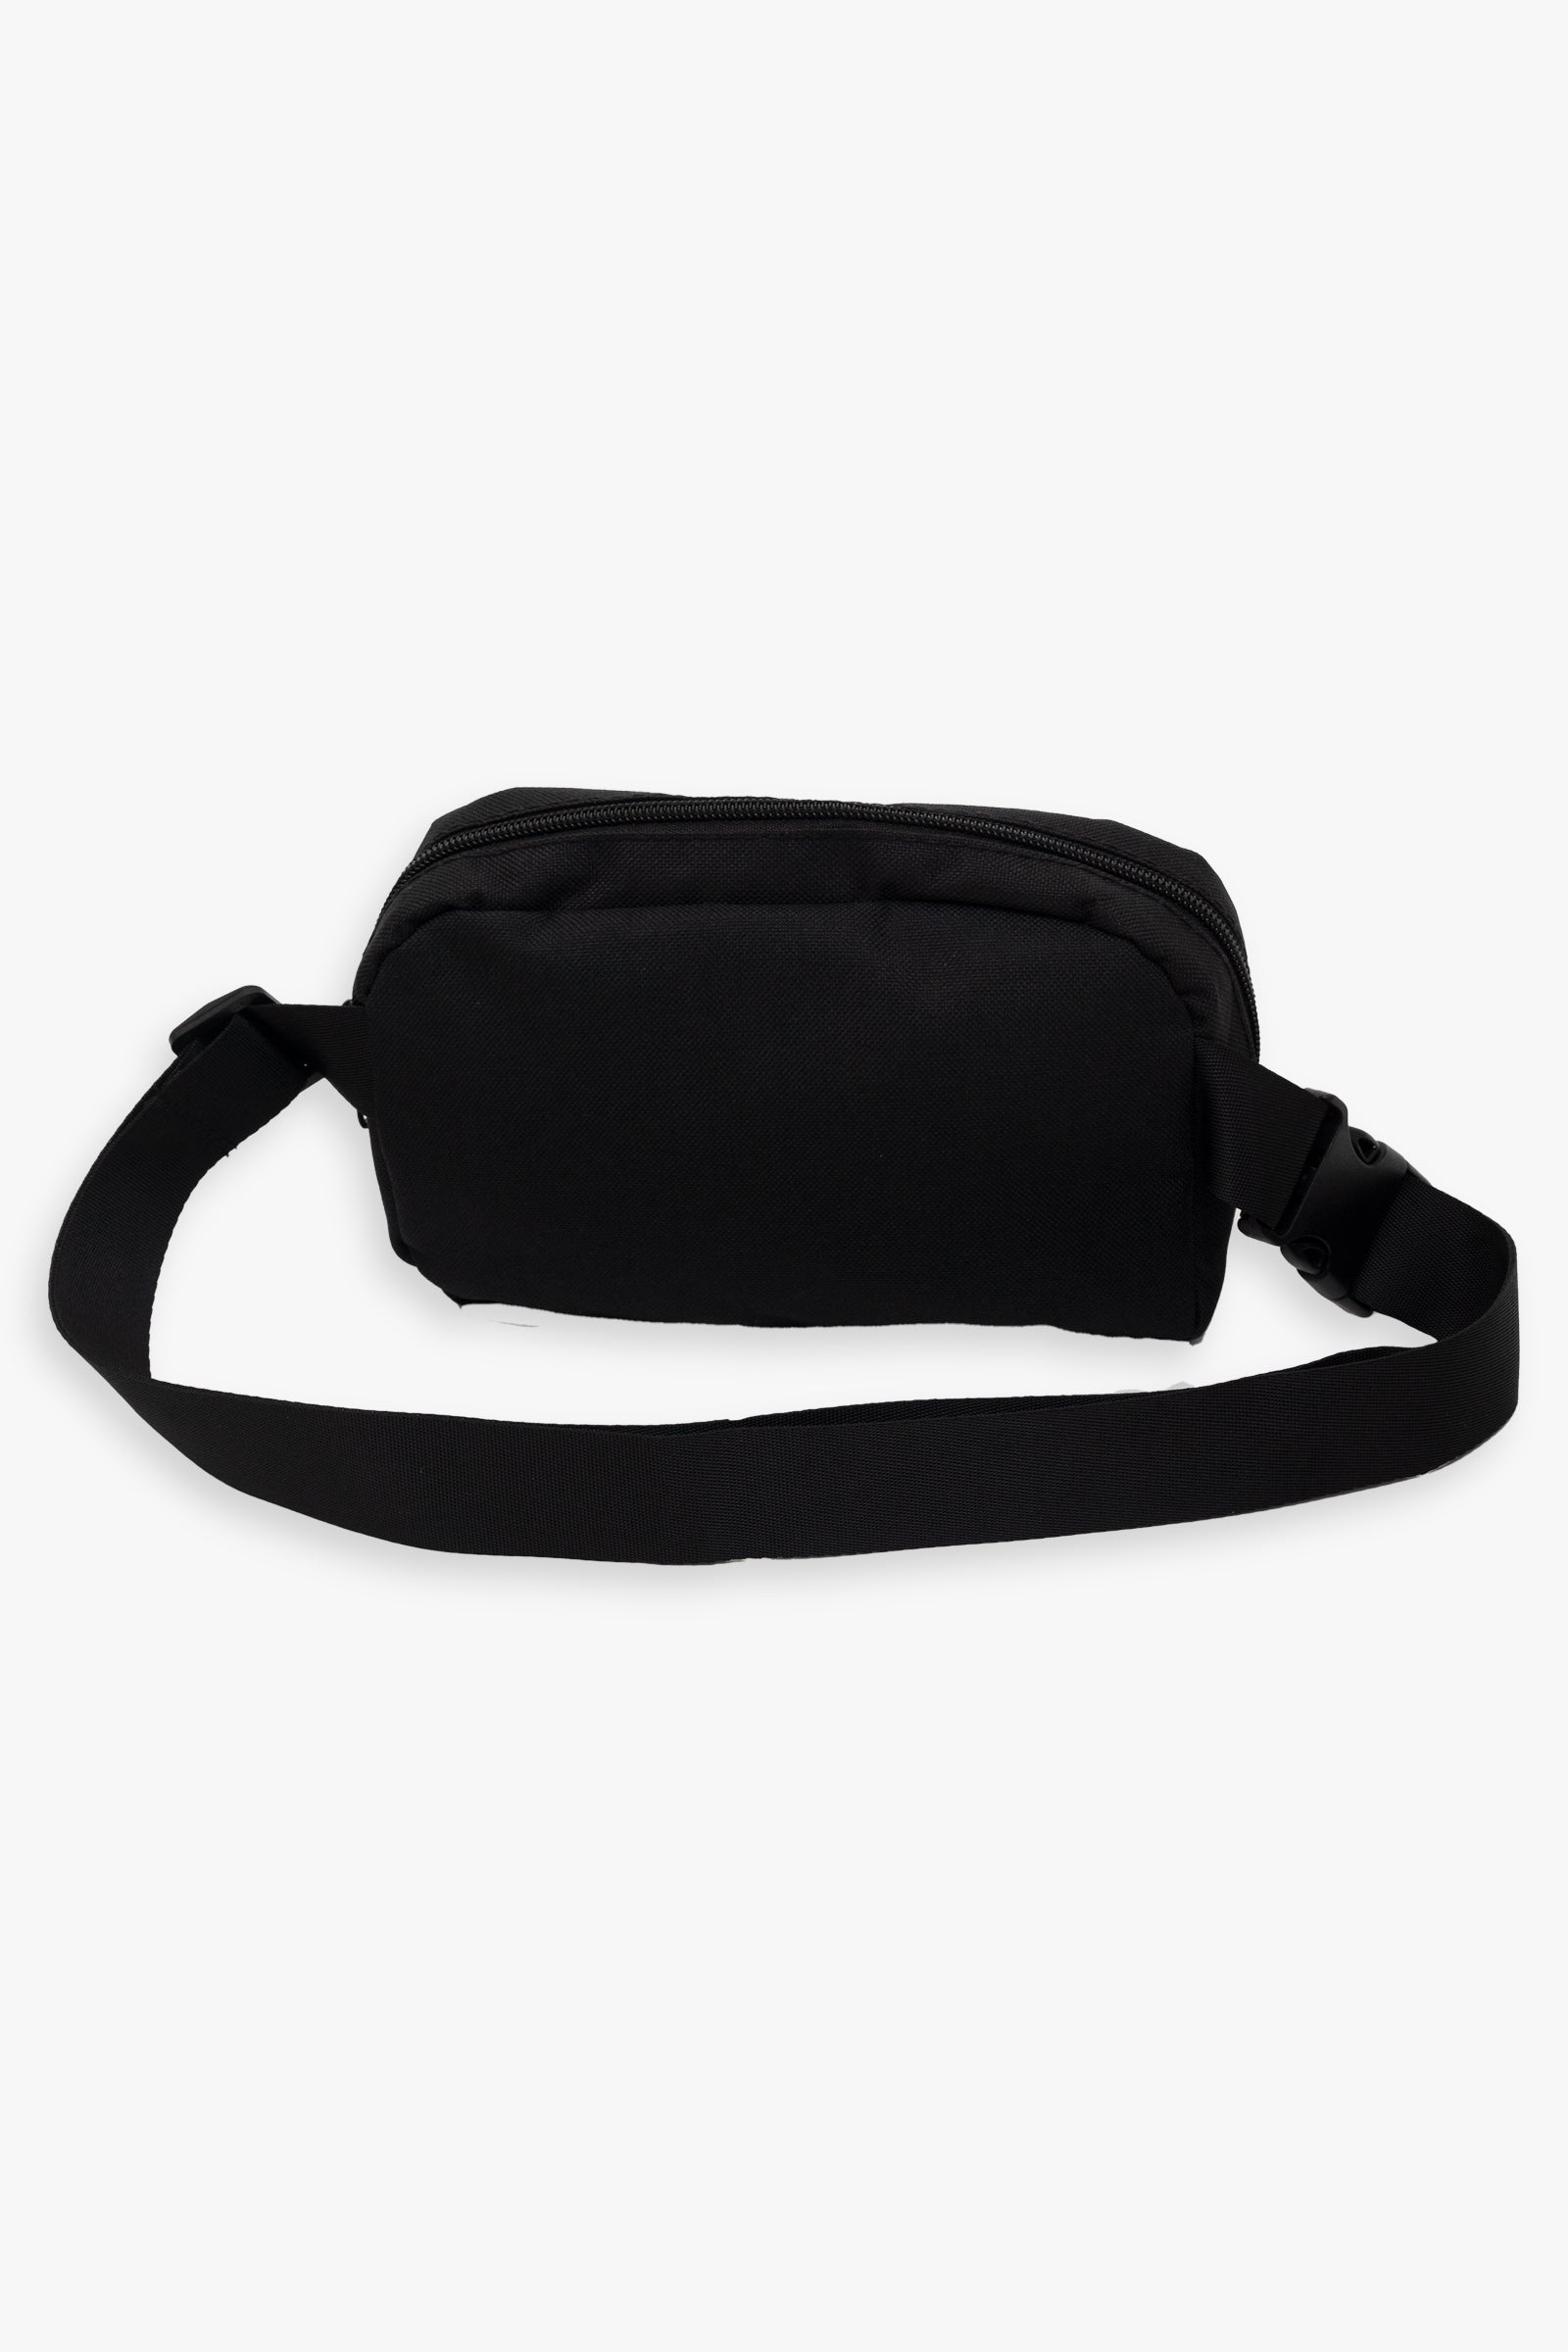 Gertex Customizable Black Belt Bag